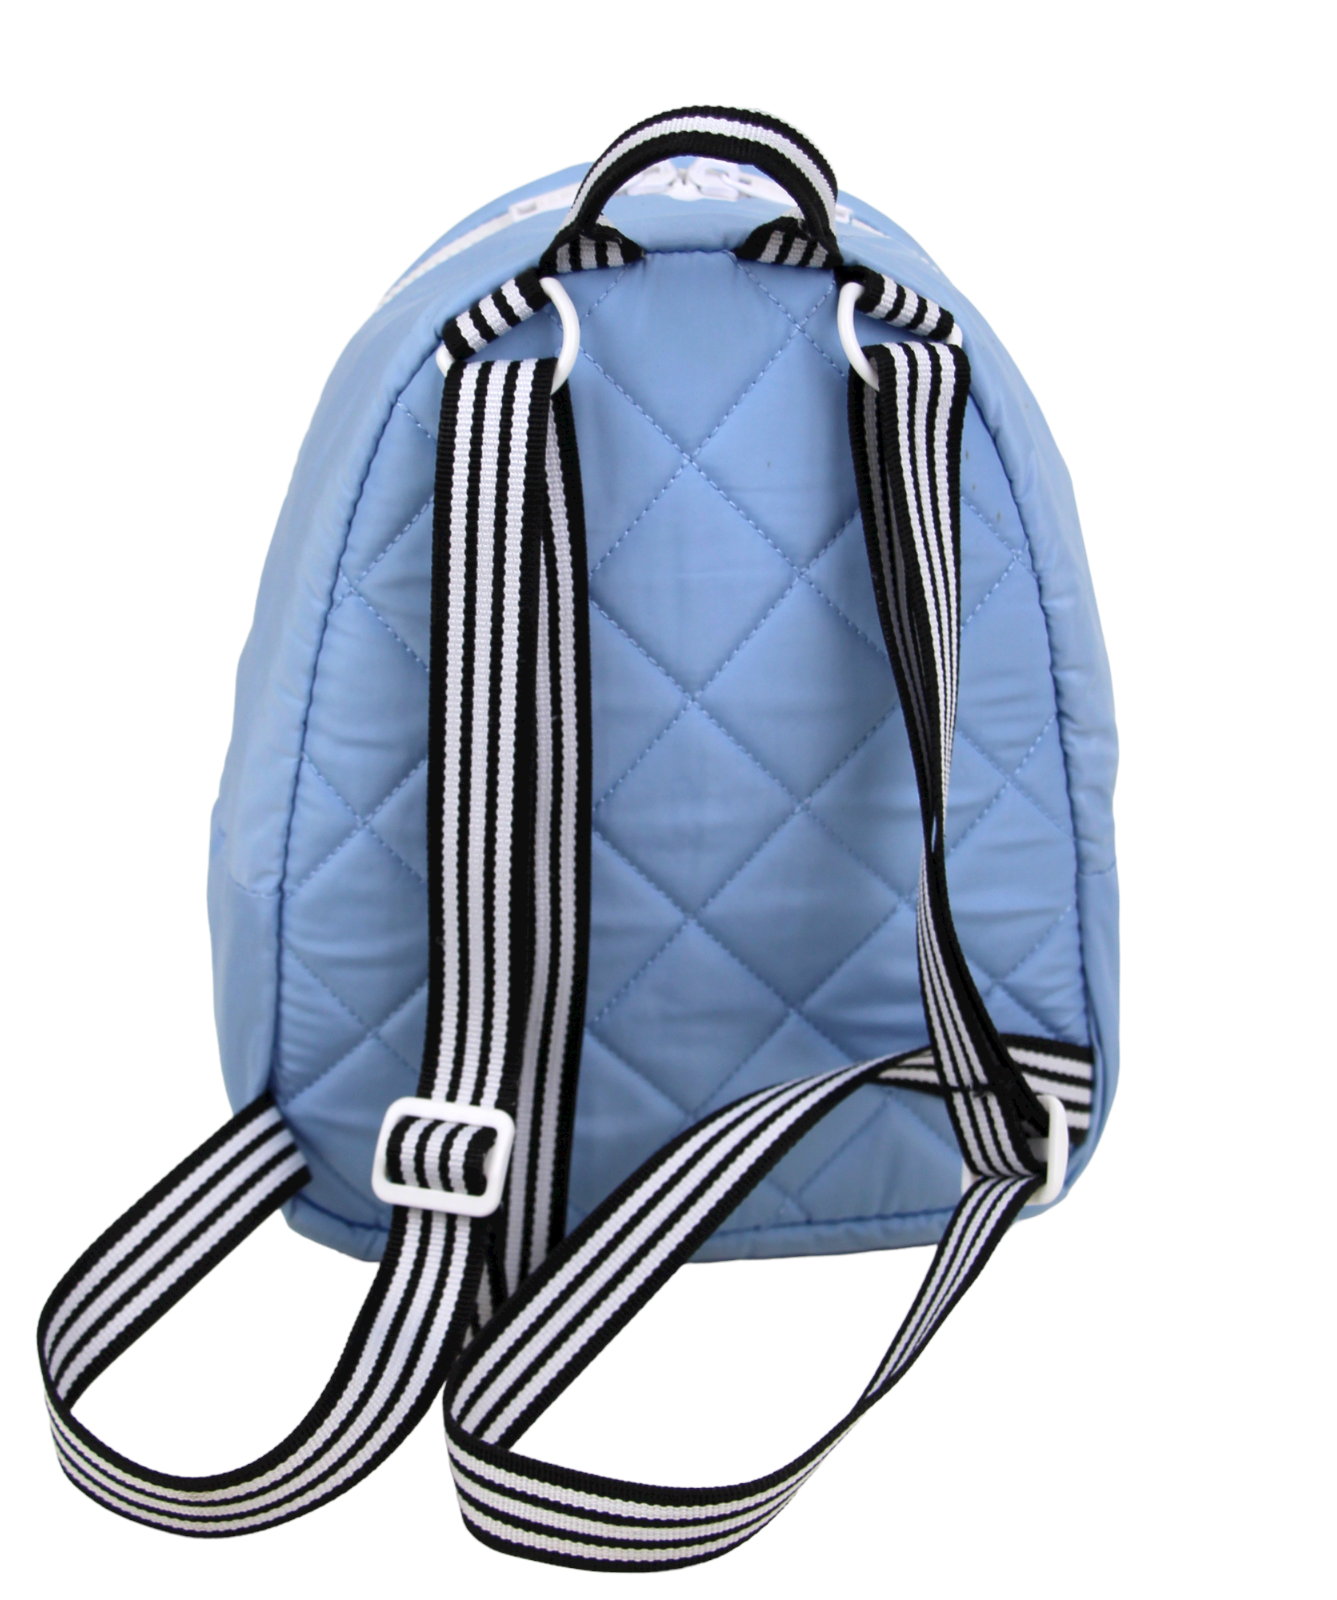 Small adidas baby blue nylon handles canvas shoulder bag backpack purse handbag